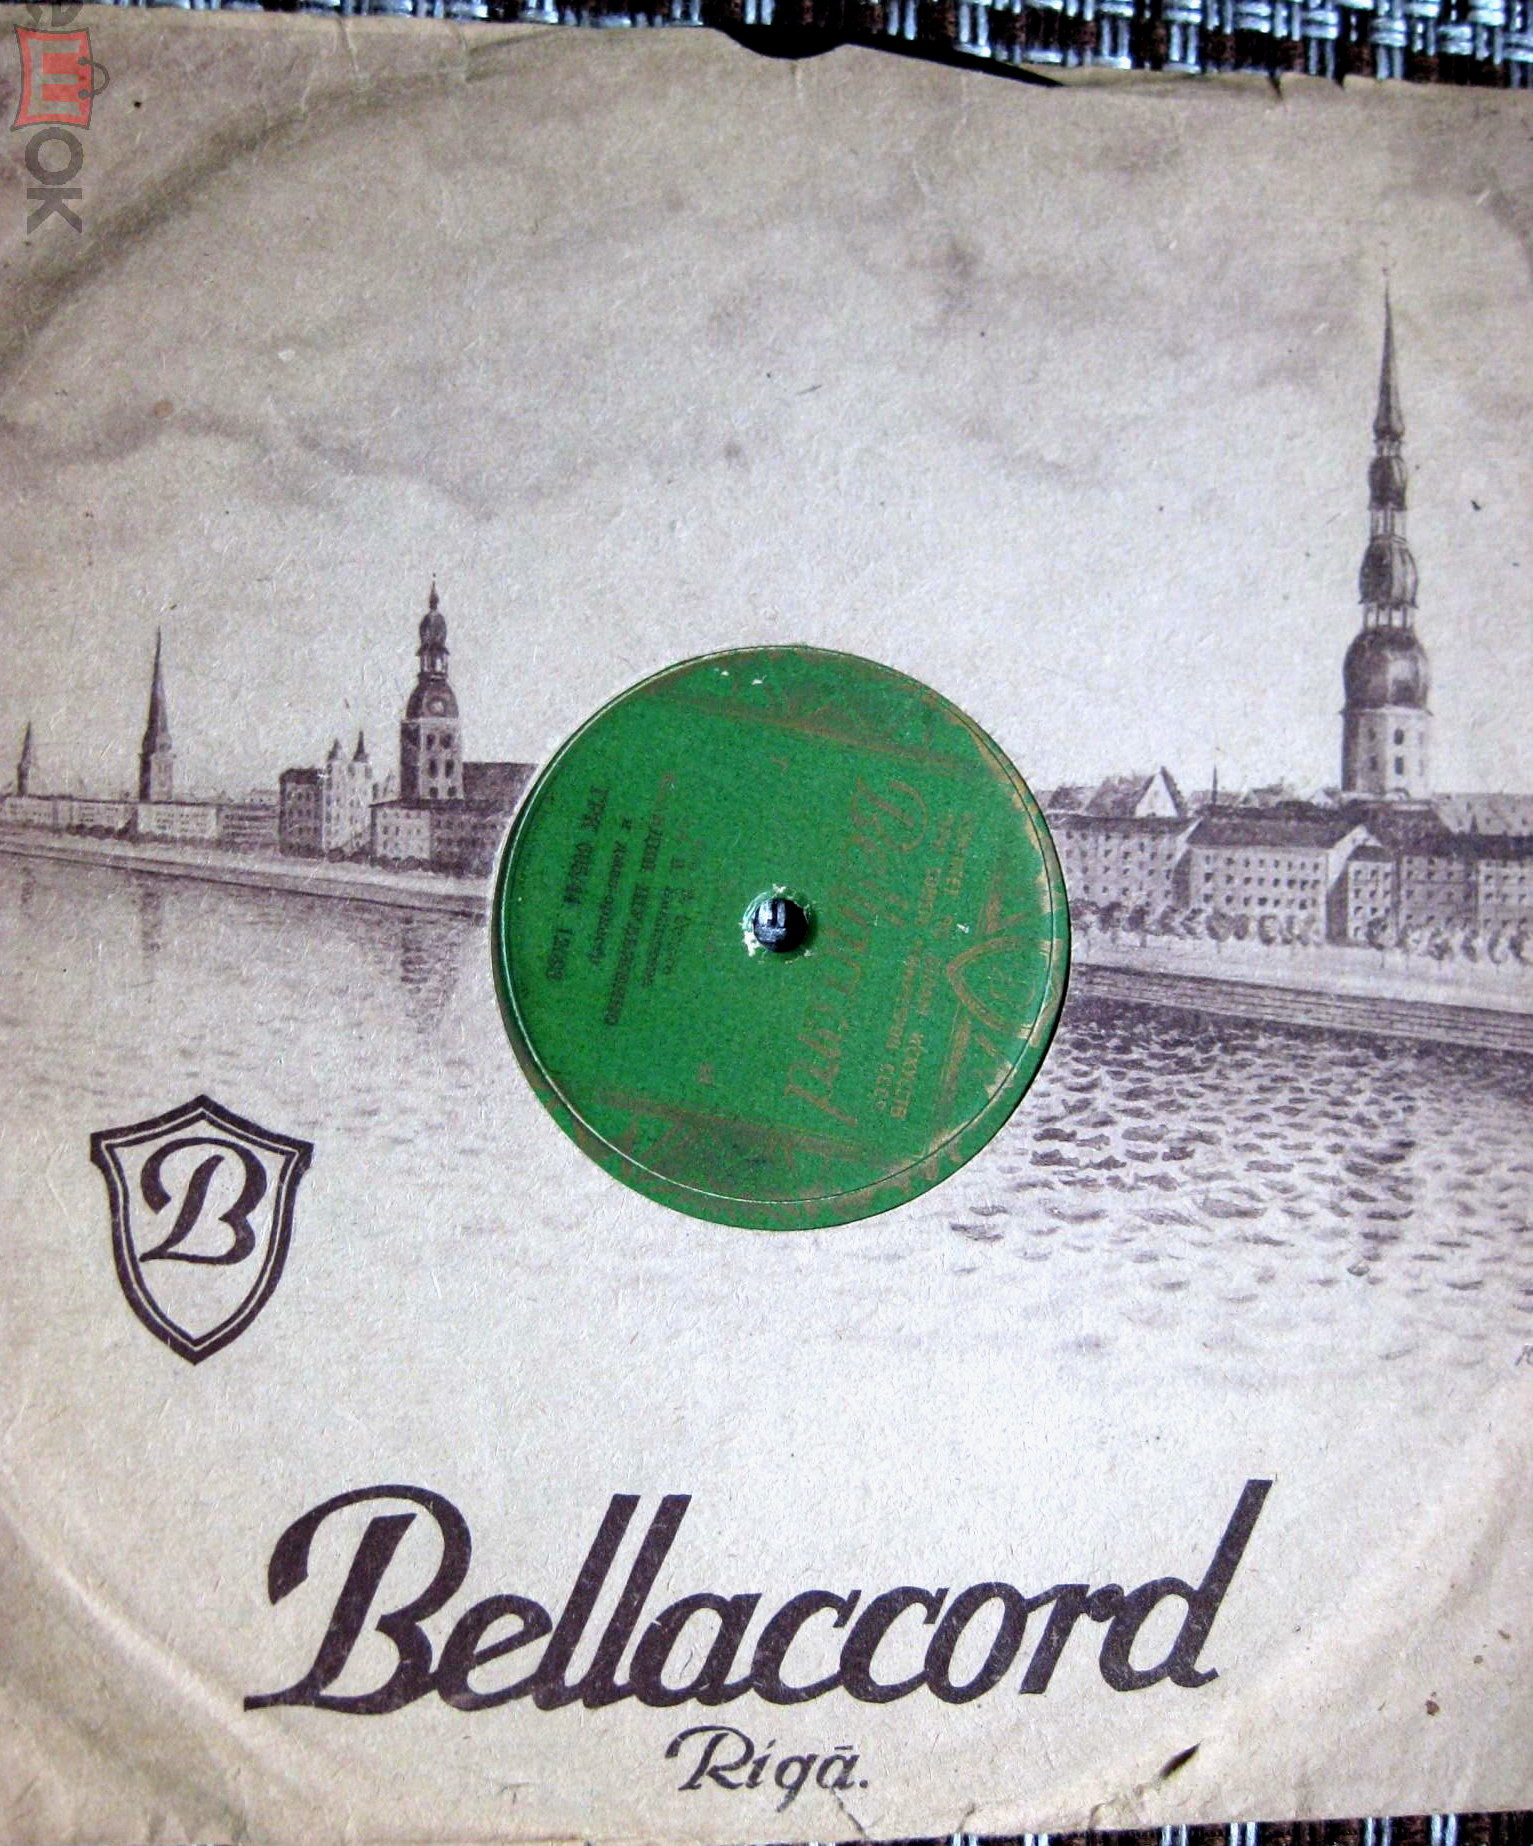 Bellaccord. Riga